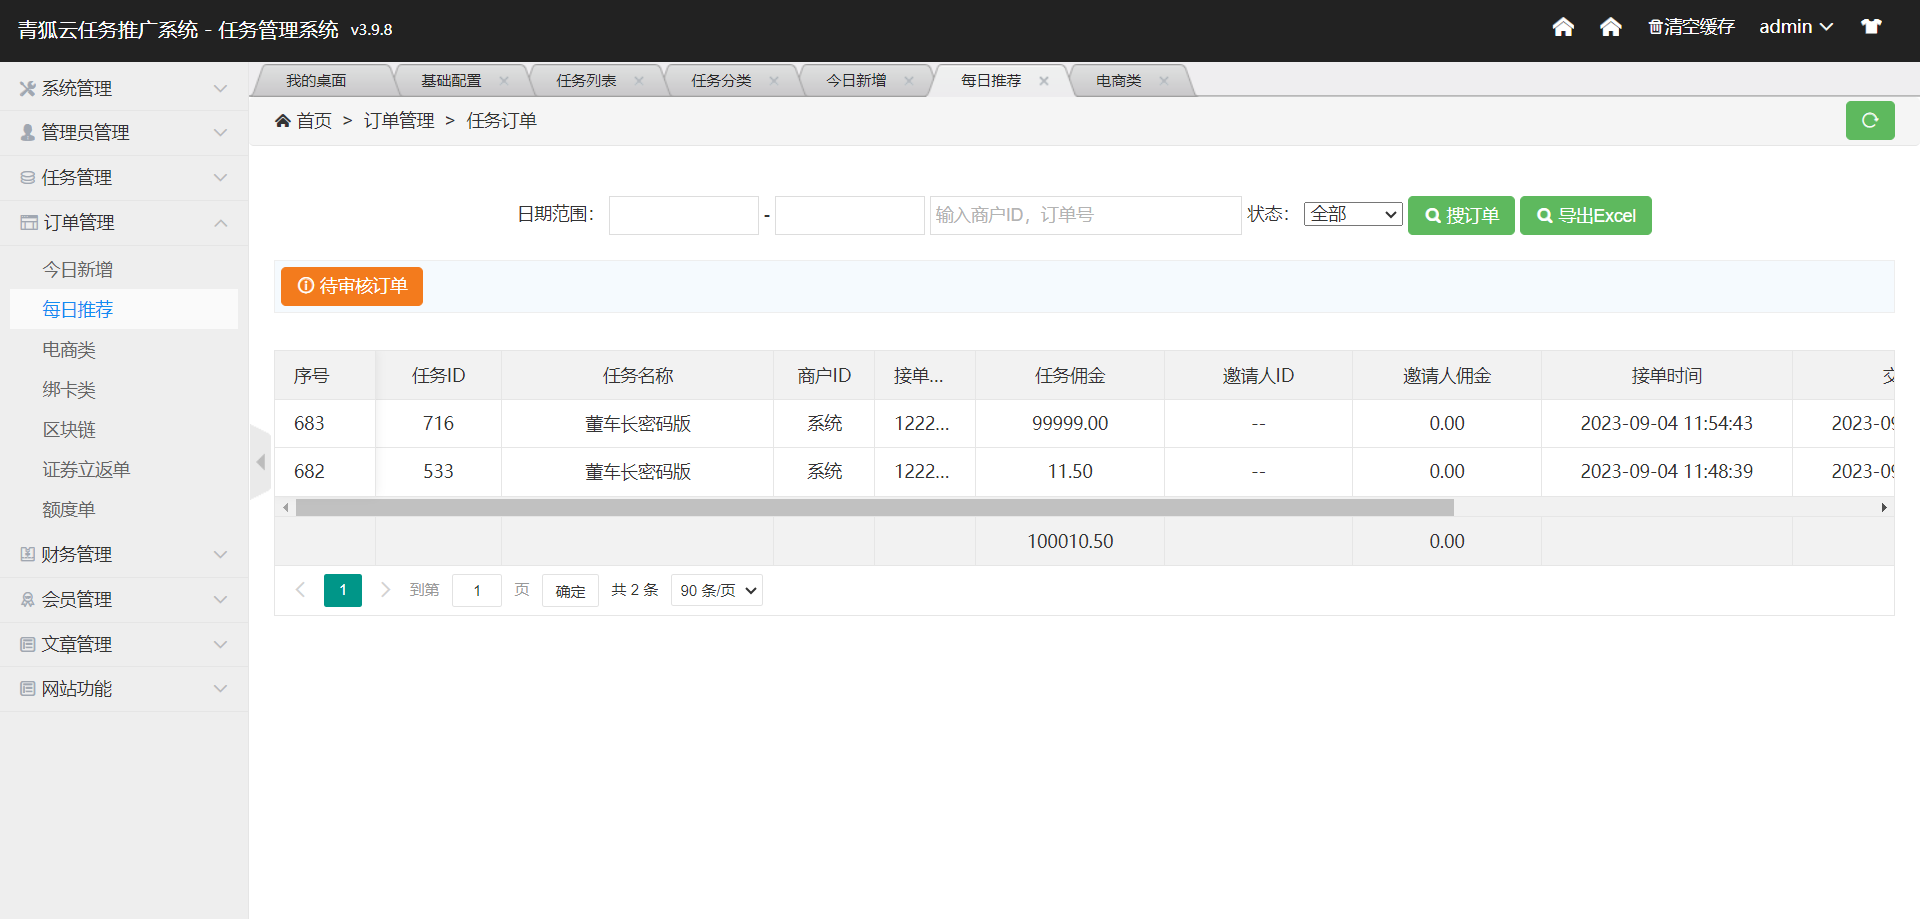 Yunzhi push ground push pull new system source code task distribution artifact with tutorial